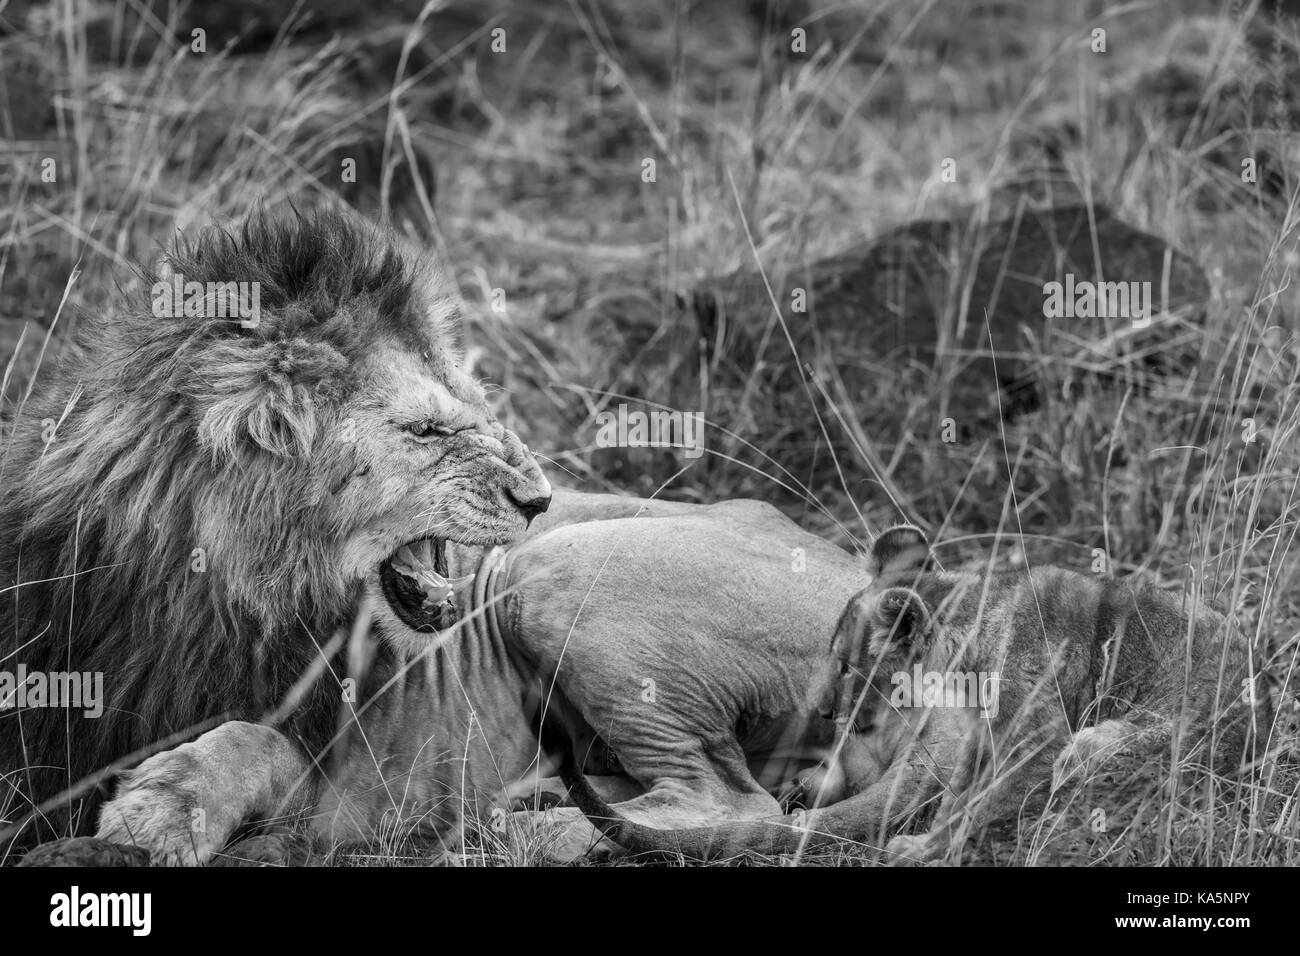 Growling lion: Aggressive adult male Masra lion (Panthera leo) bares its teeth as it growls and snarls at a cowering lion cub, Masai Mara, Kenya Stock Photo